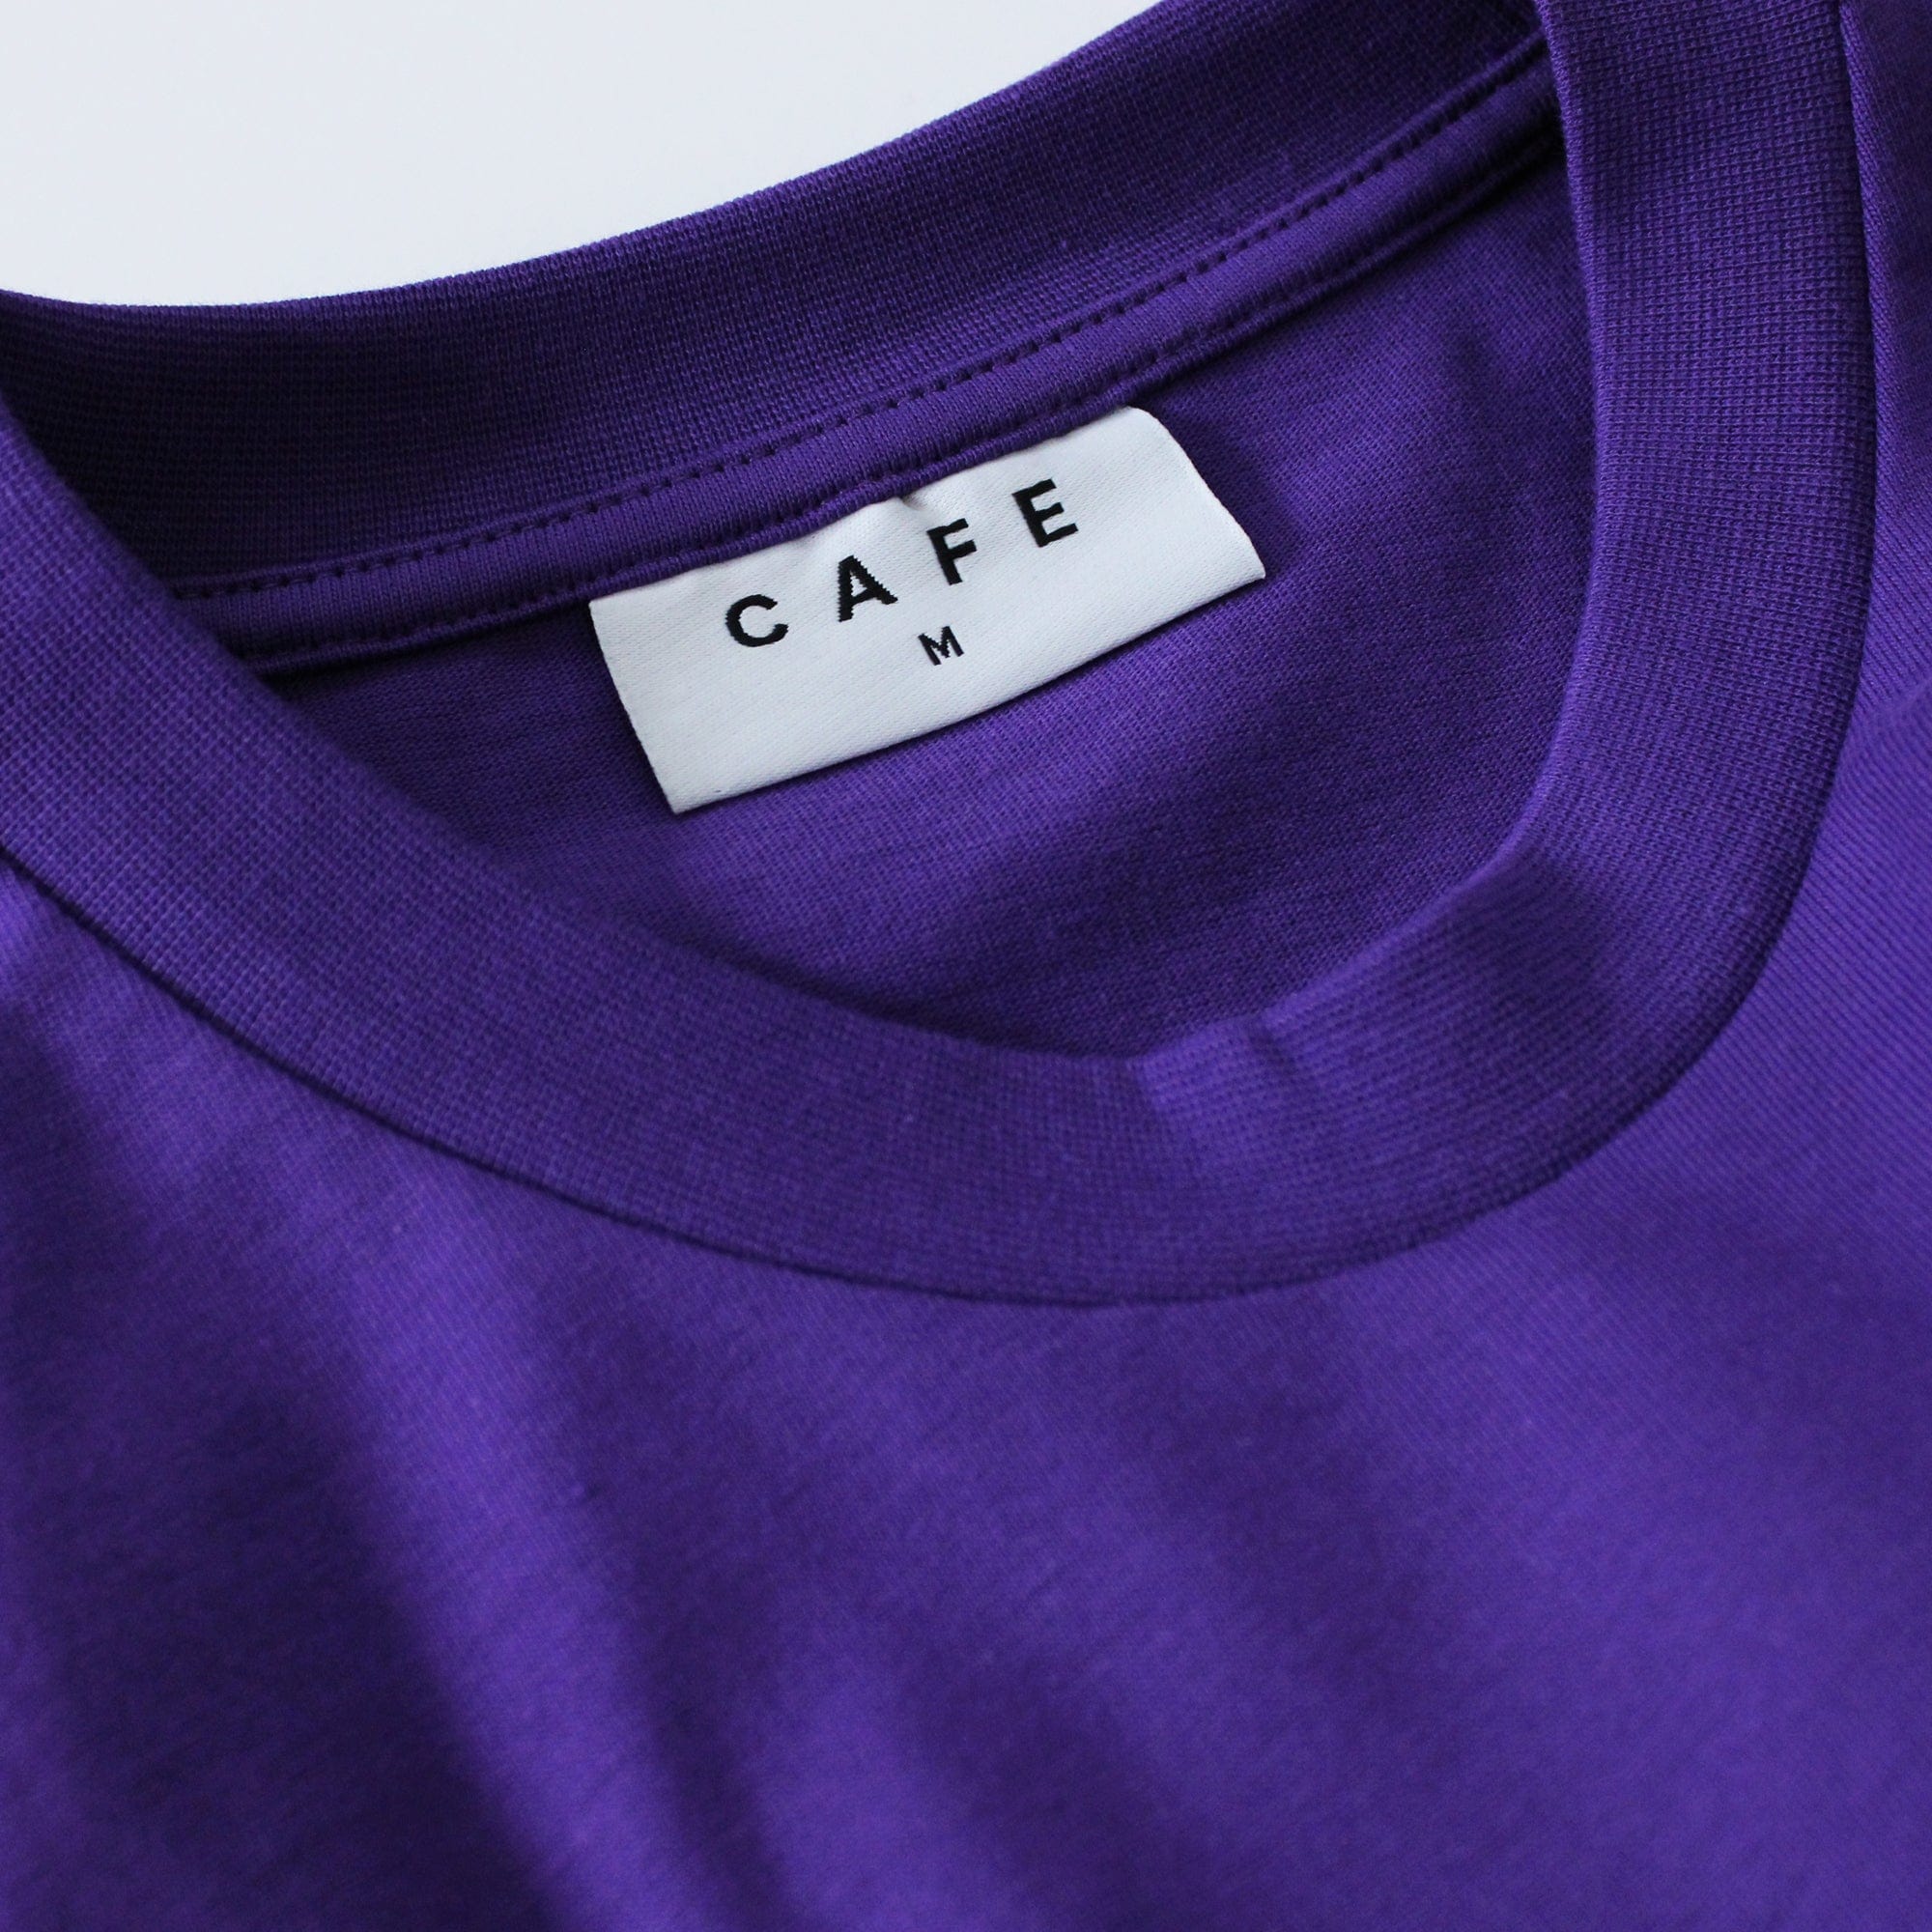 Skateboard Cafe "Cheers" T-Shirt Purple